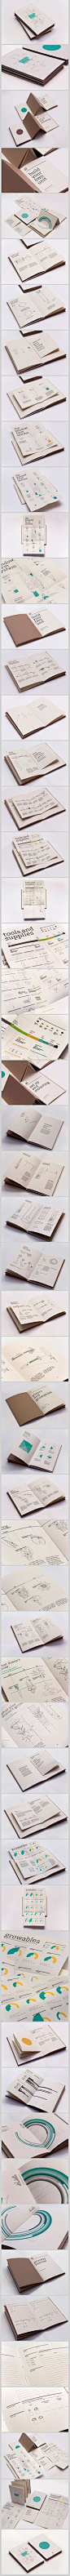 Window Farms: Information Design Book by Jiani Lu on Béhance@北坤人素材